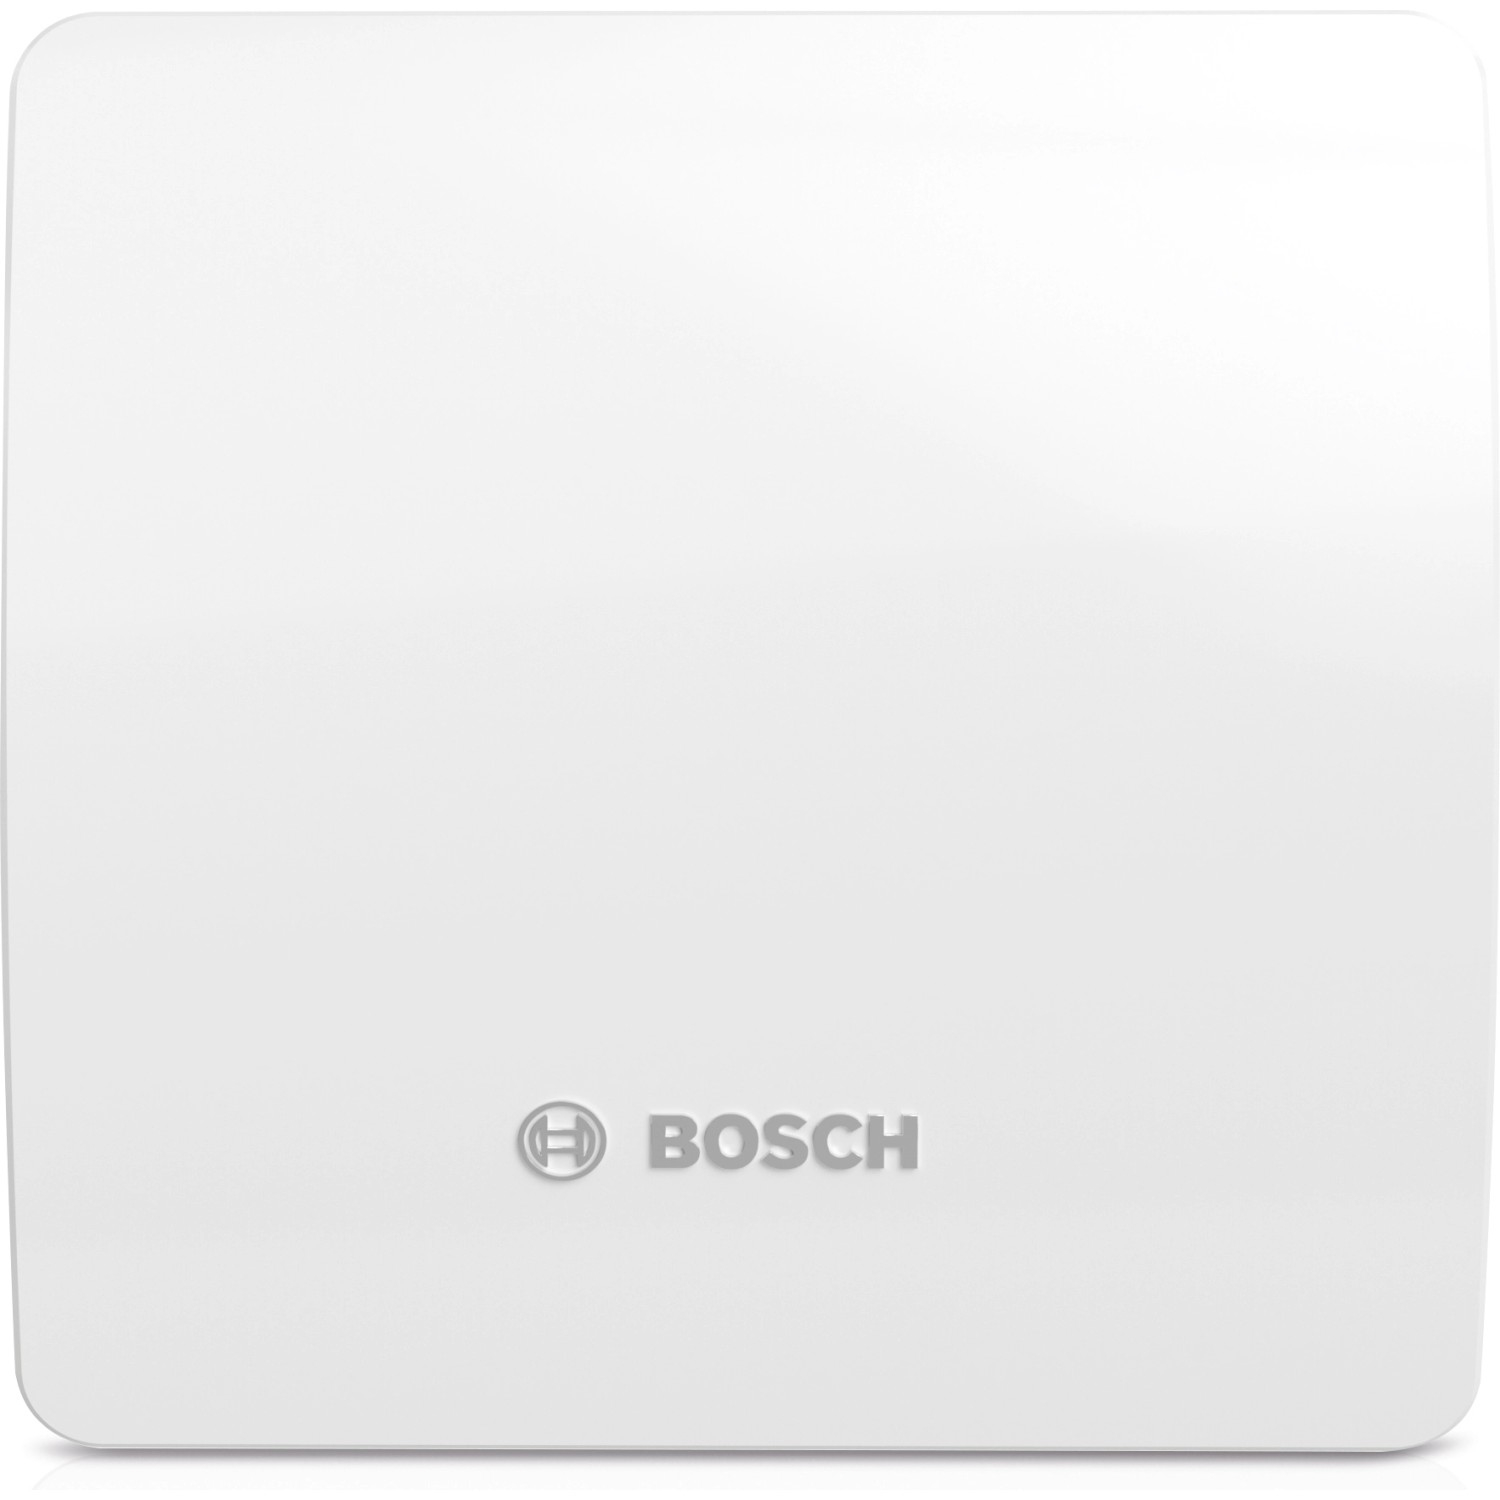 Bosch Badventilator Fan 1500 DH W 125 mit Luftfeuchtesensor Weiß-Glänzend